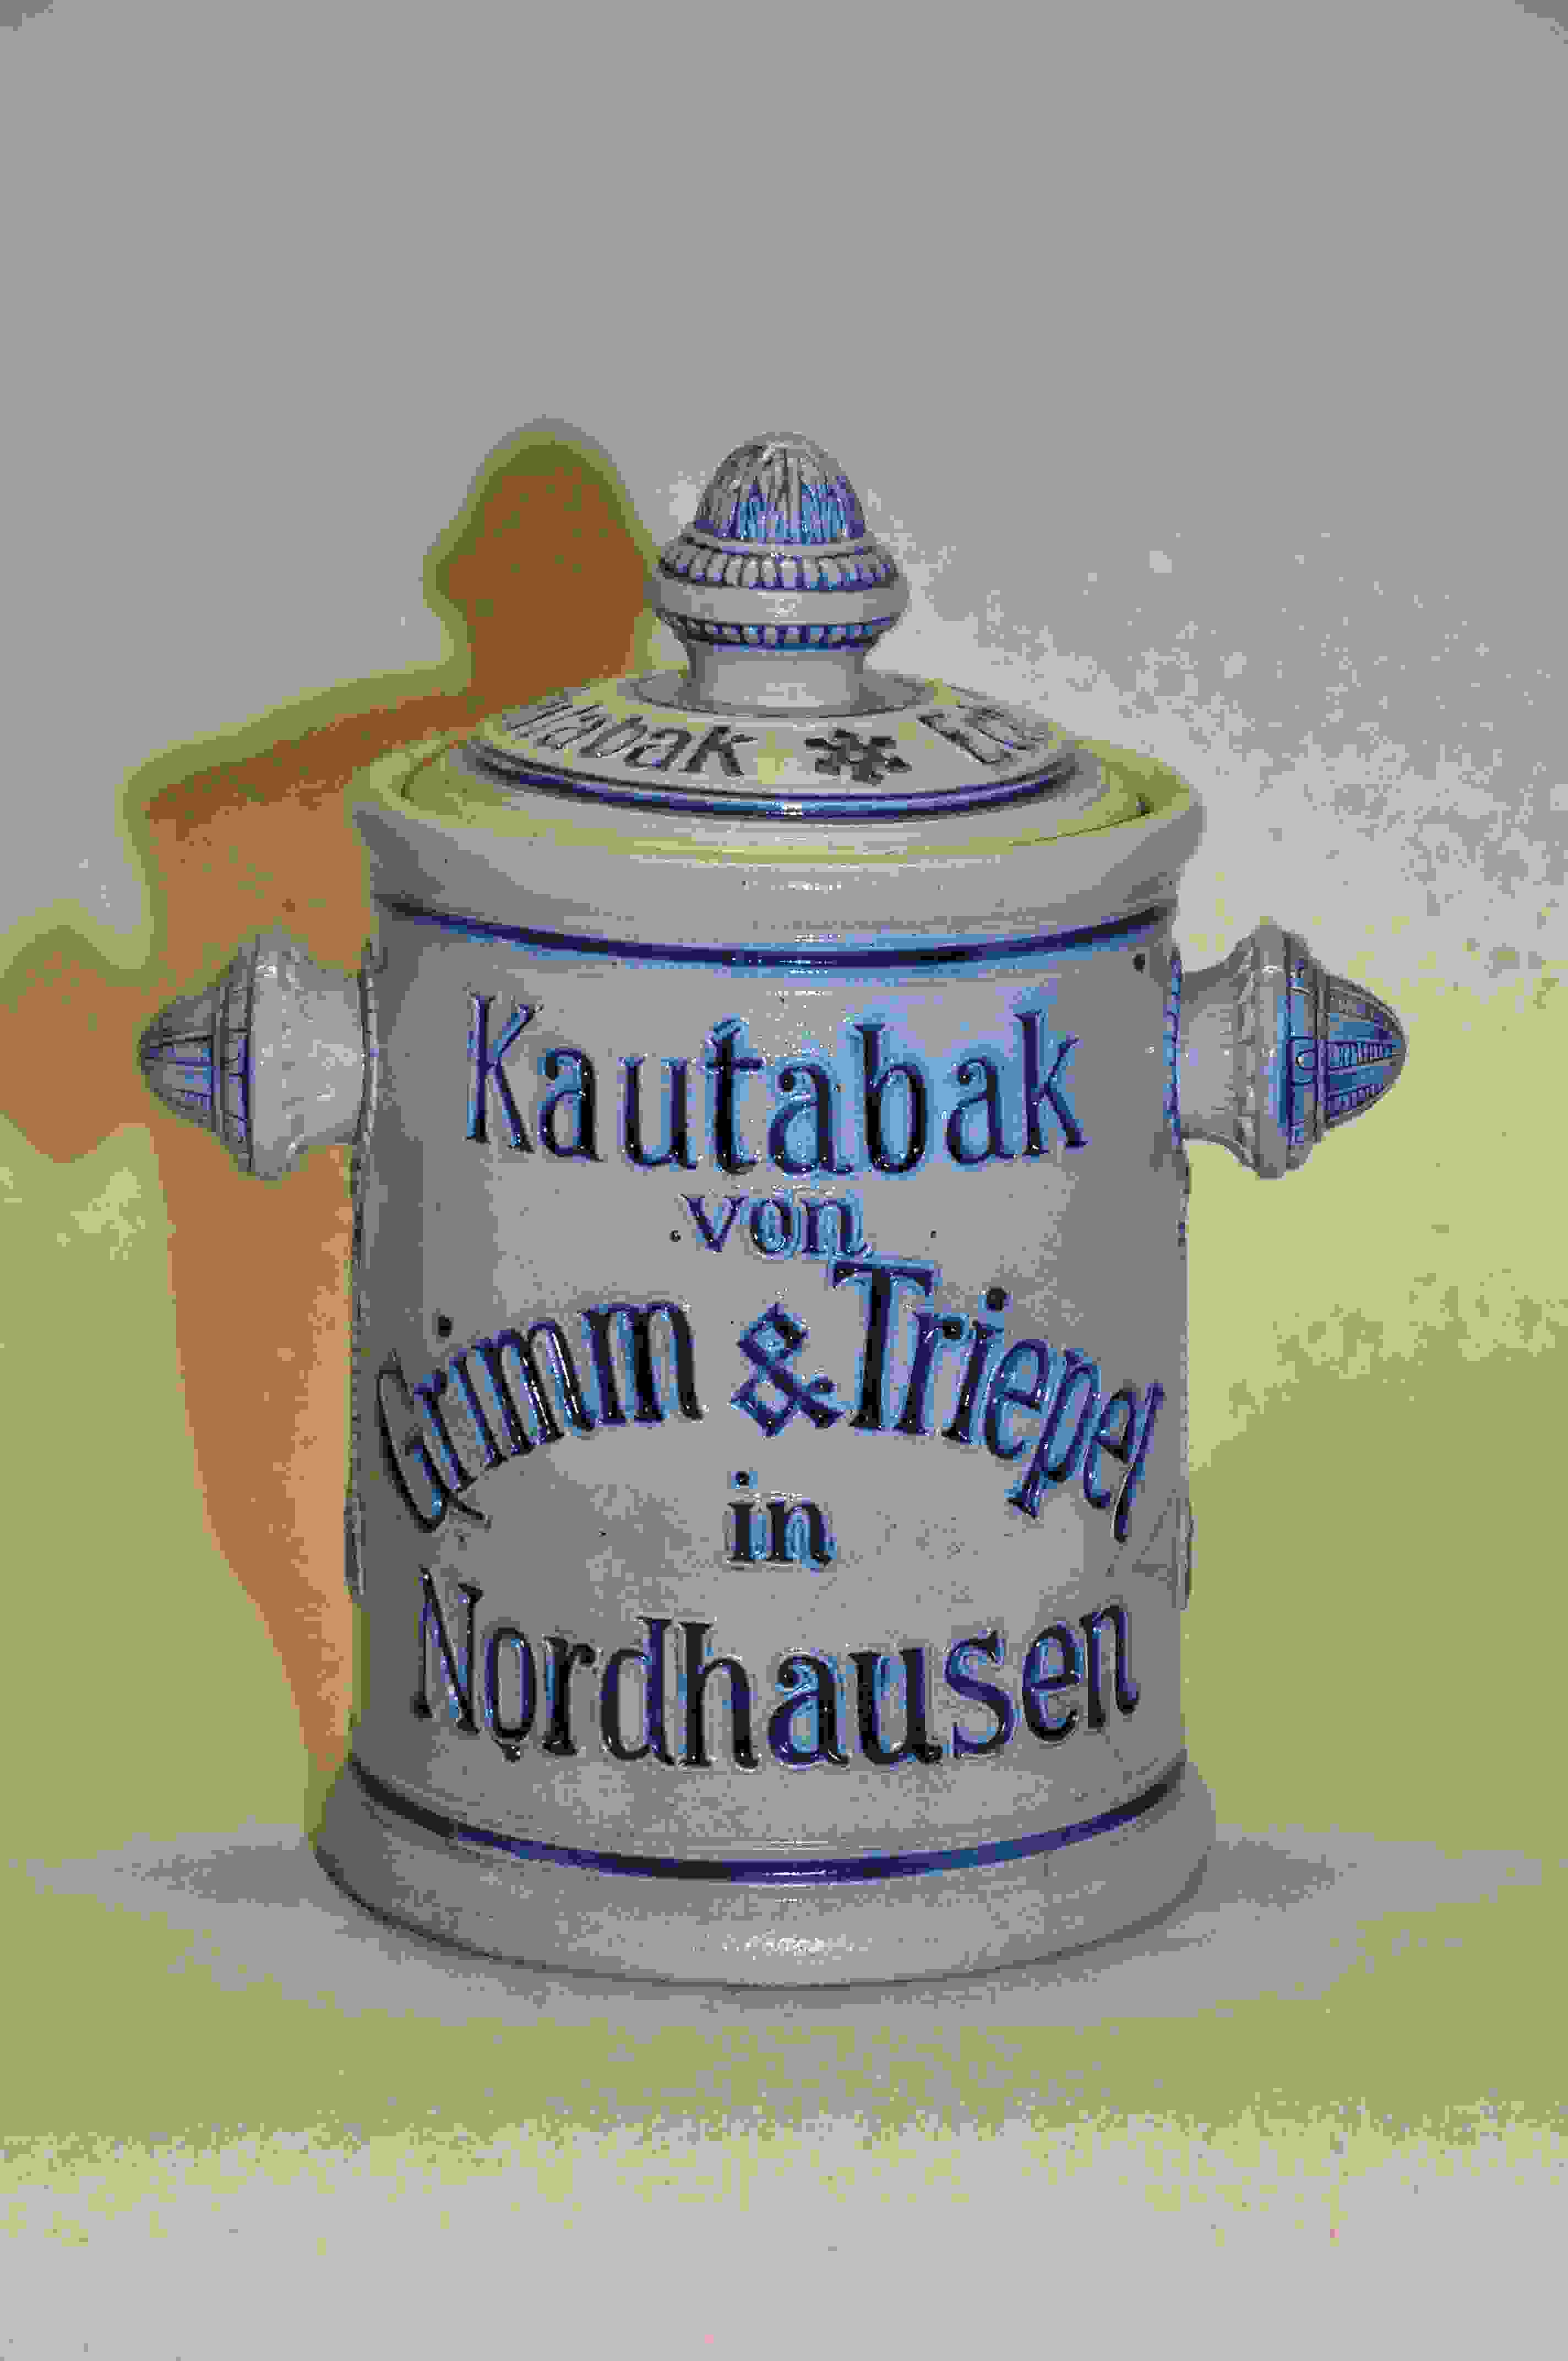 Grimm & Triepel Kautabak 